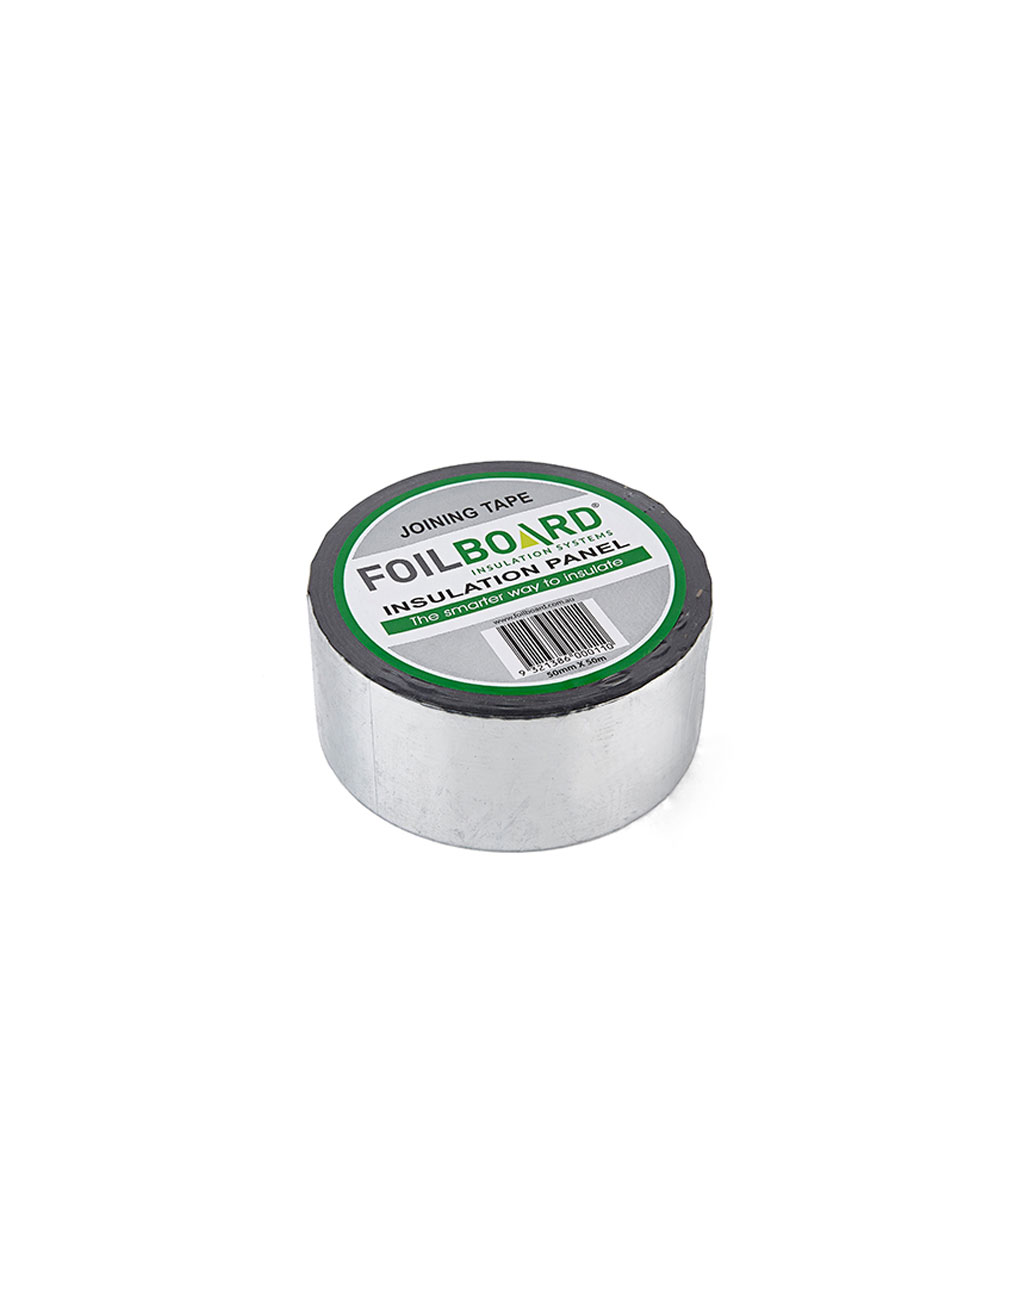 Buy Foilboard Insulation Silver Foil Tape